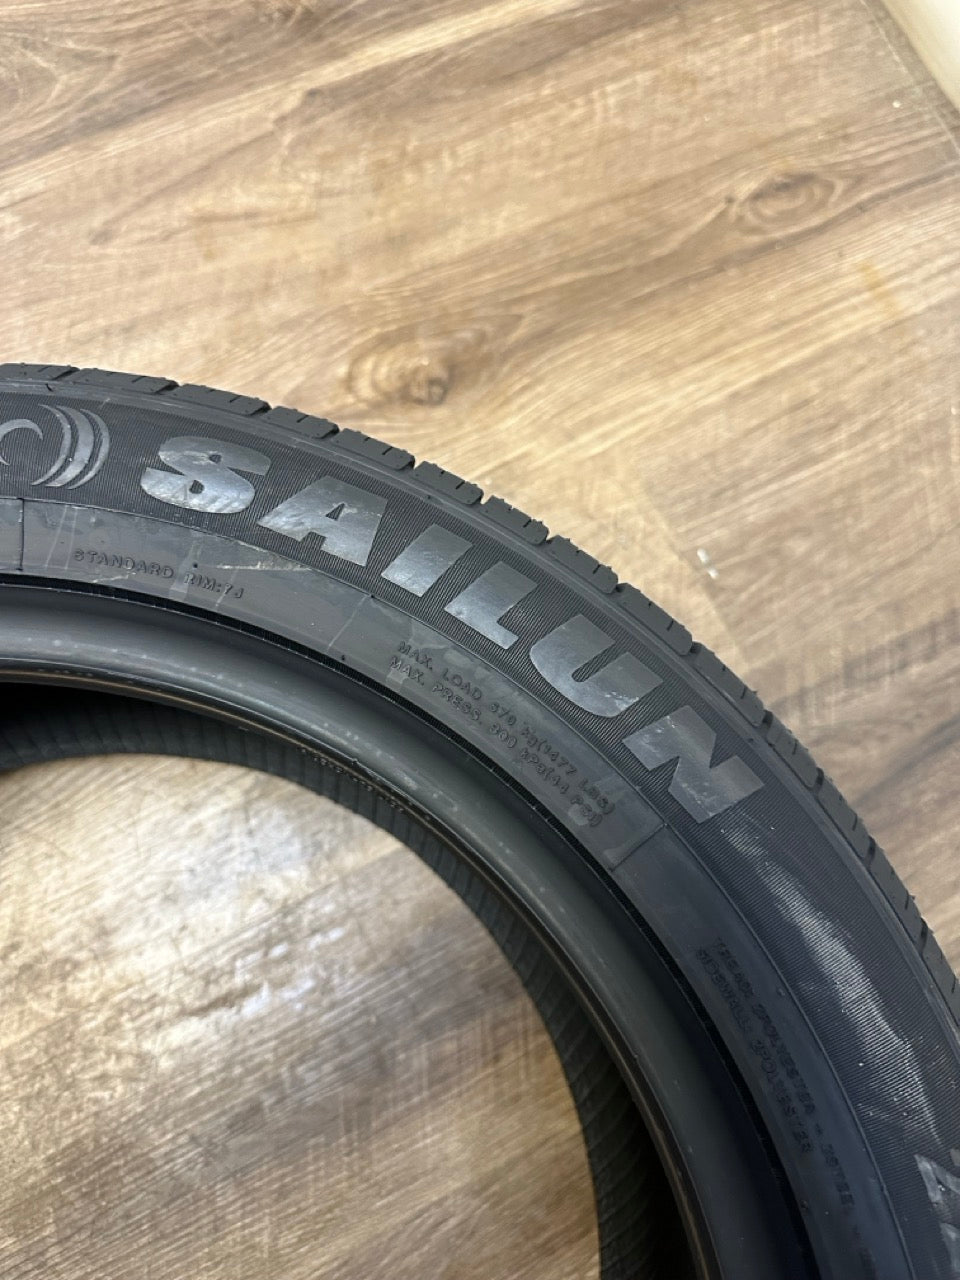 225/50/17 Sailun All Season Tires